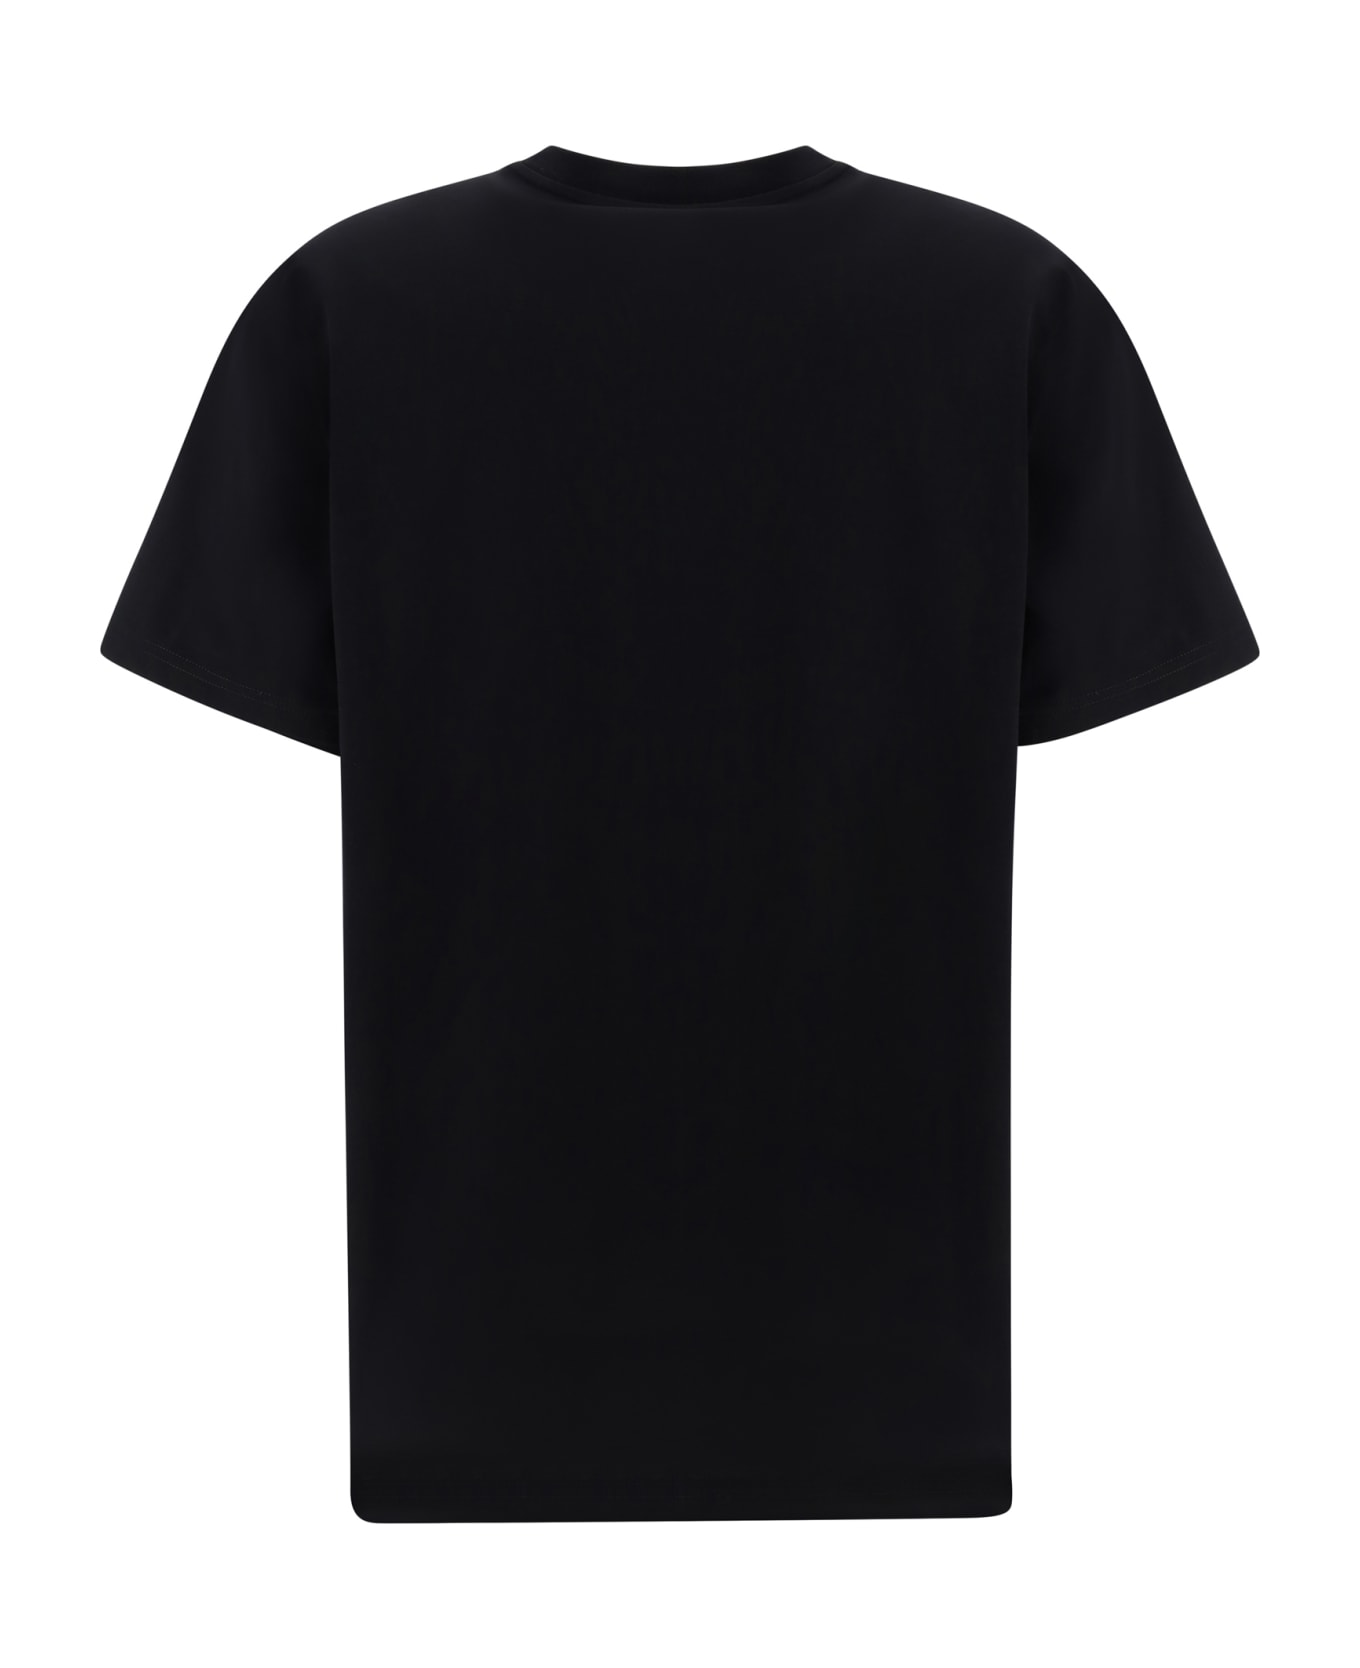 Burberry Pocket T-shirt - Black